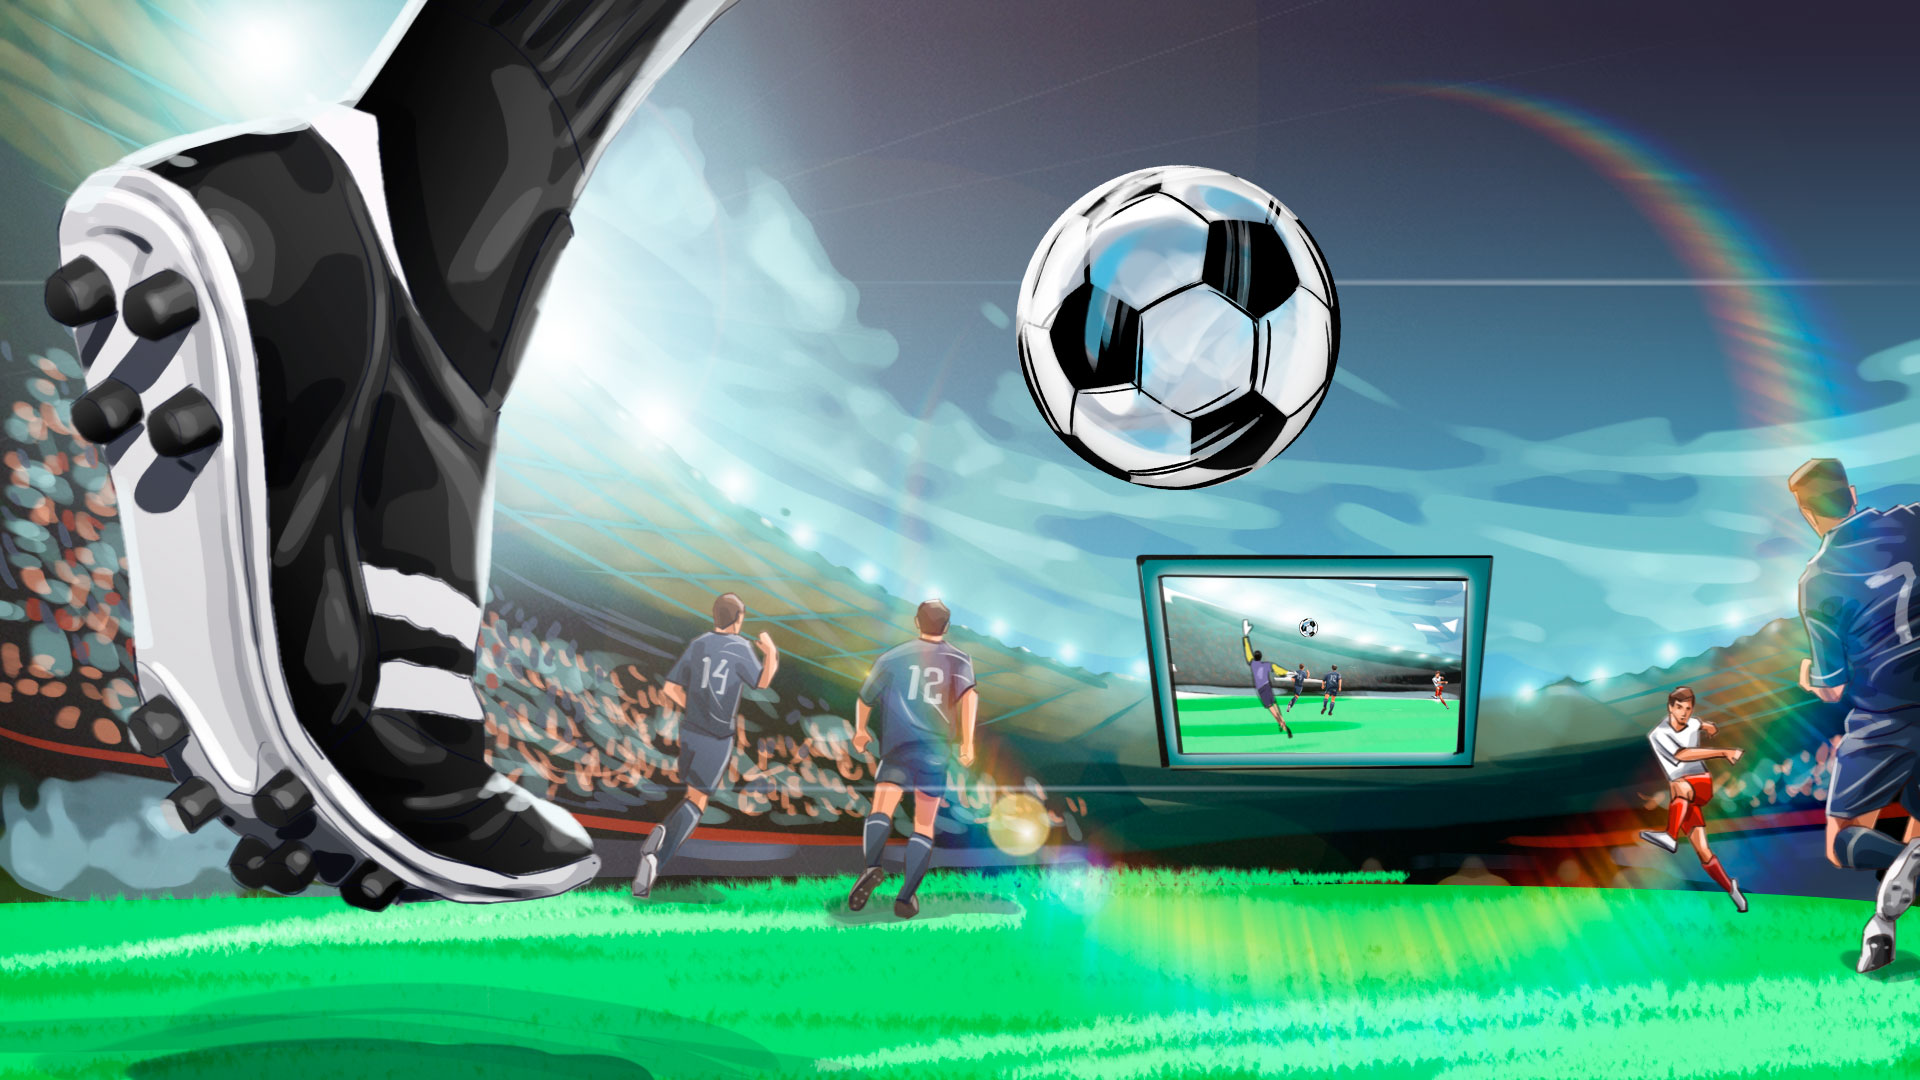 player fifa soccer illustration game advertising